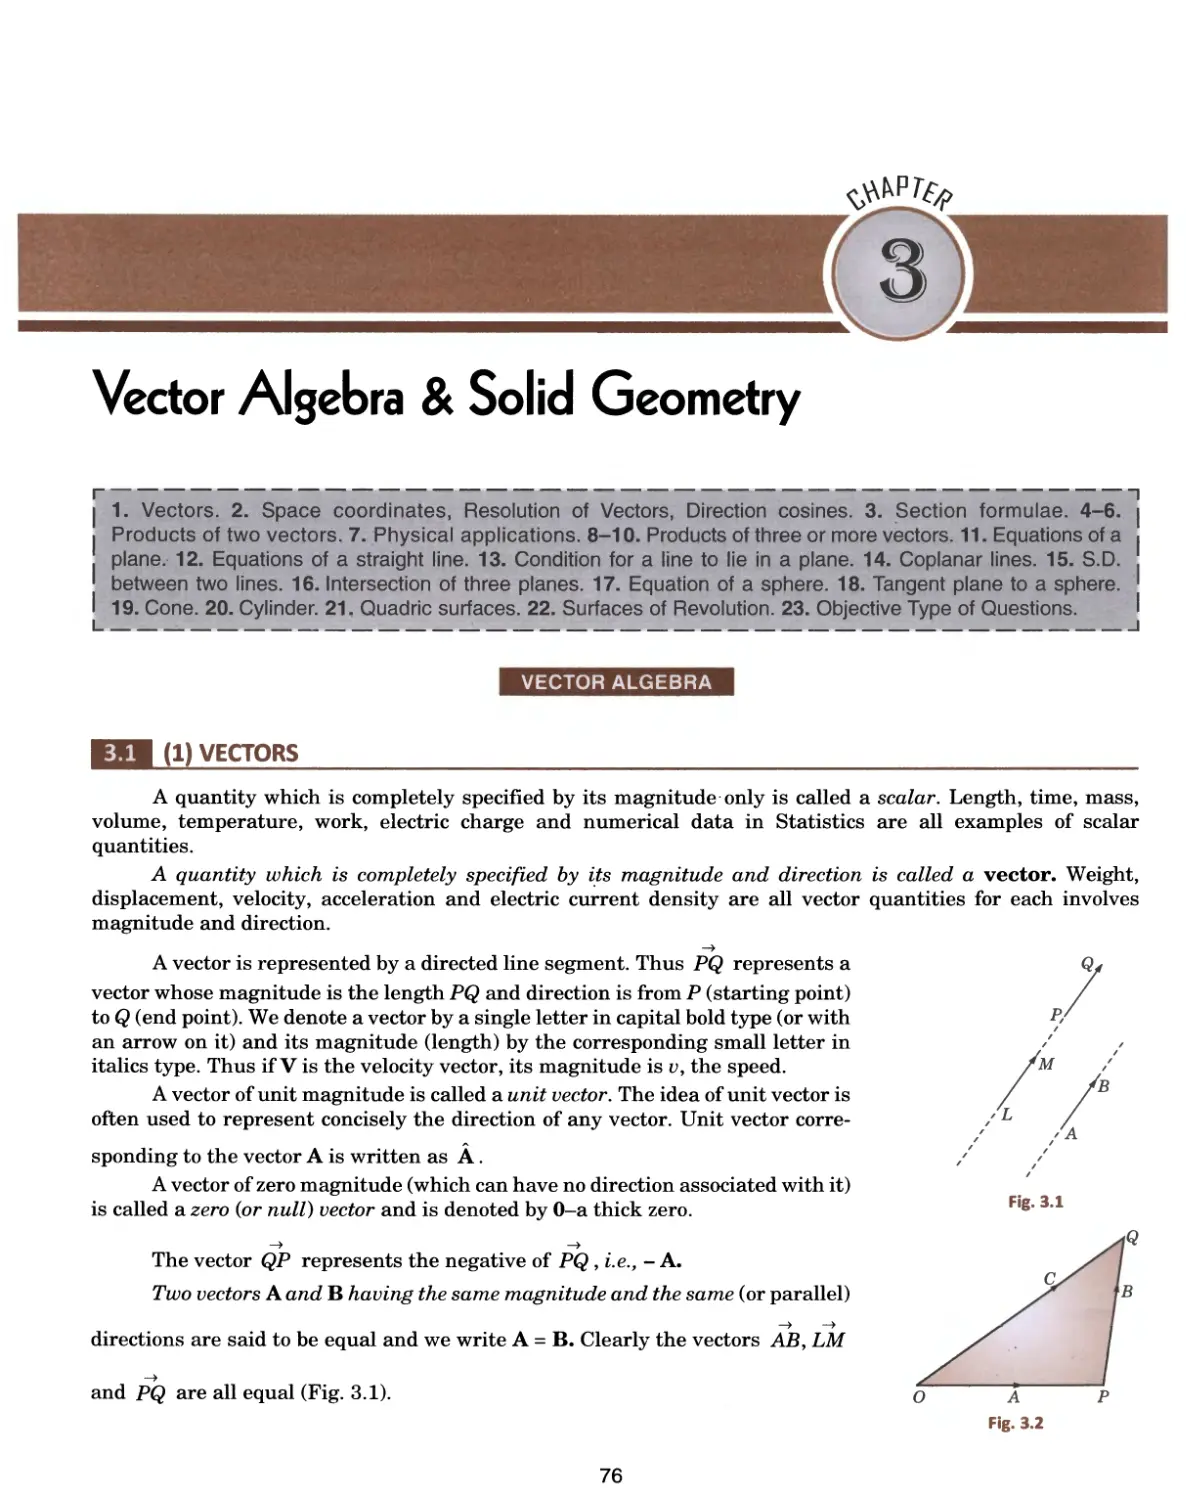 3.Vector Algebra and Solid Geometry 76